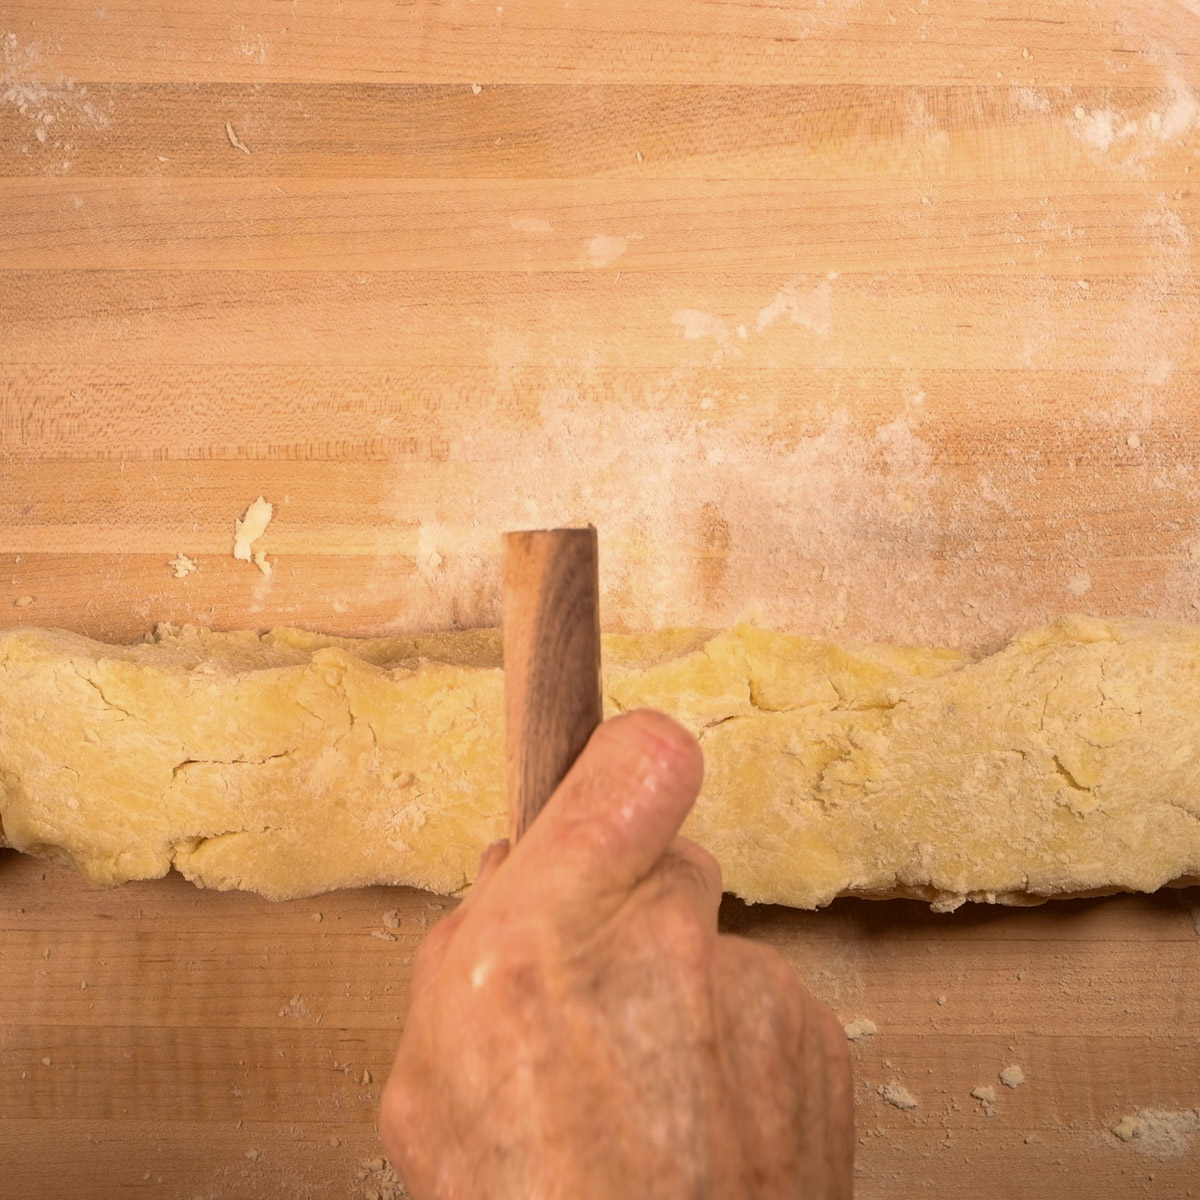 Roll the potato dough into a log and cut into four pieces.